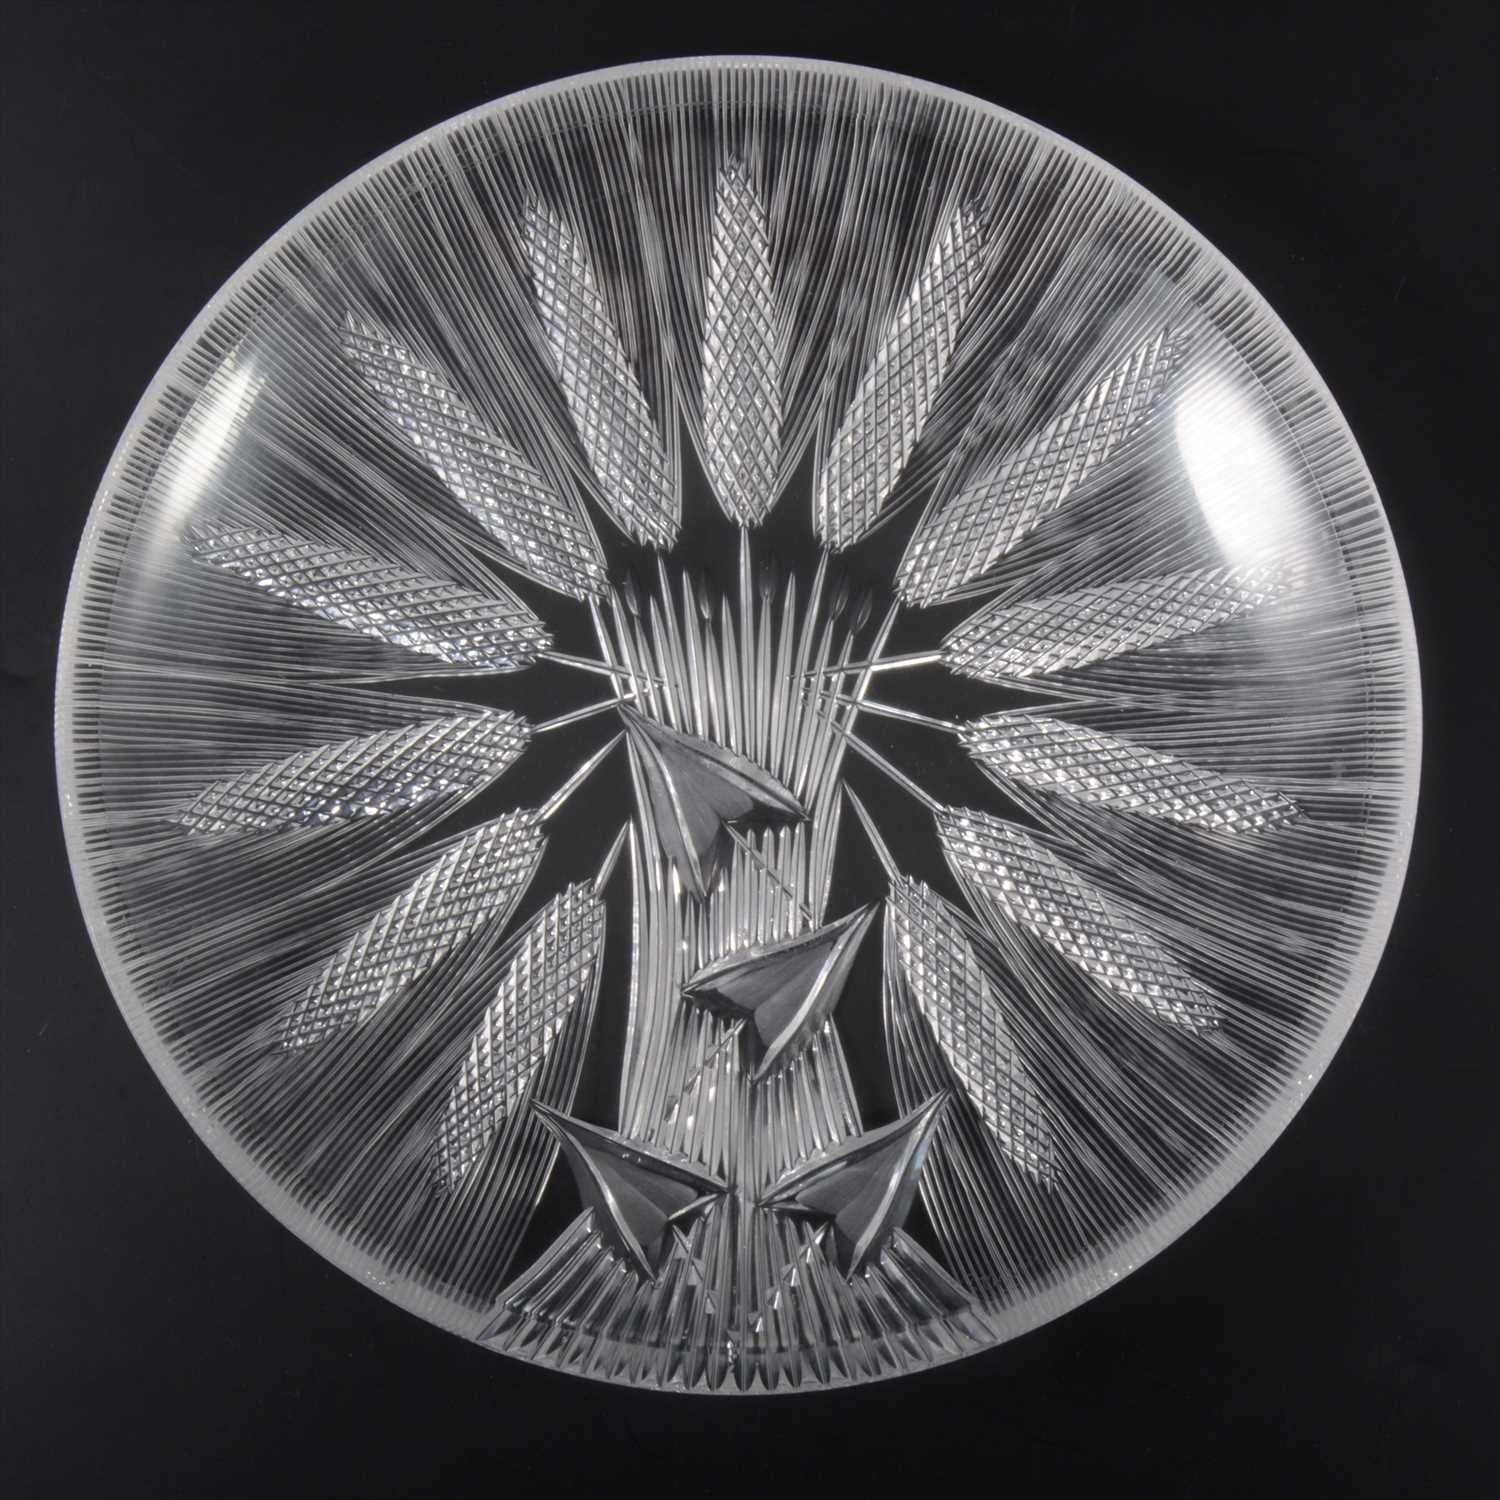 Lot 626 - A 'Barley' design cut crystal glass dish, by Josef Švarc, post-1945.